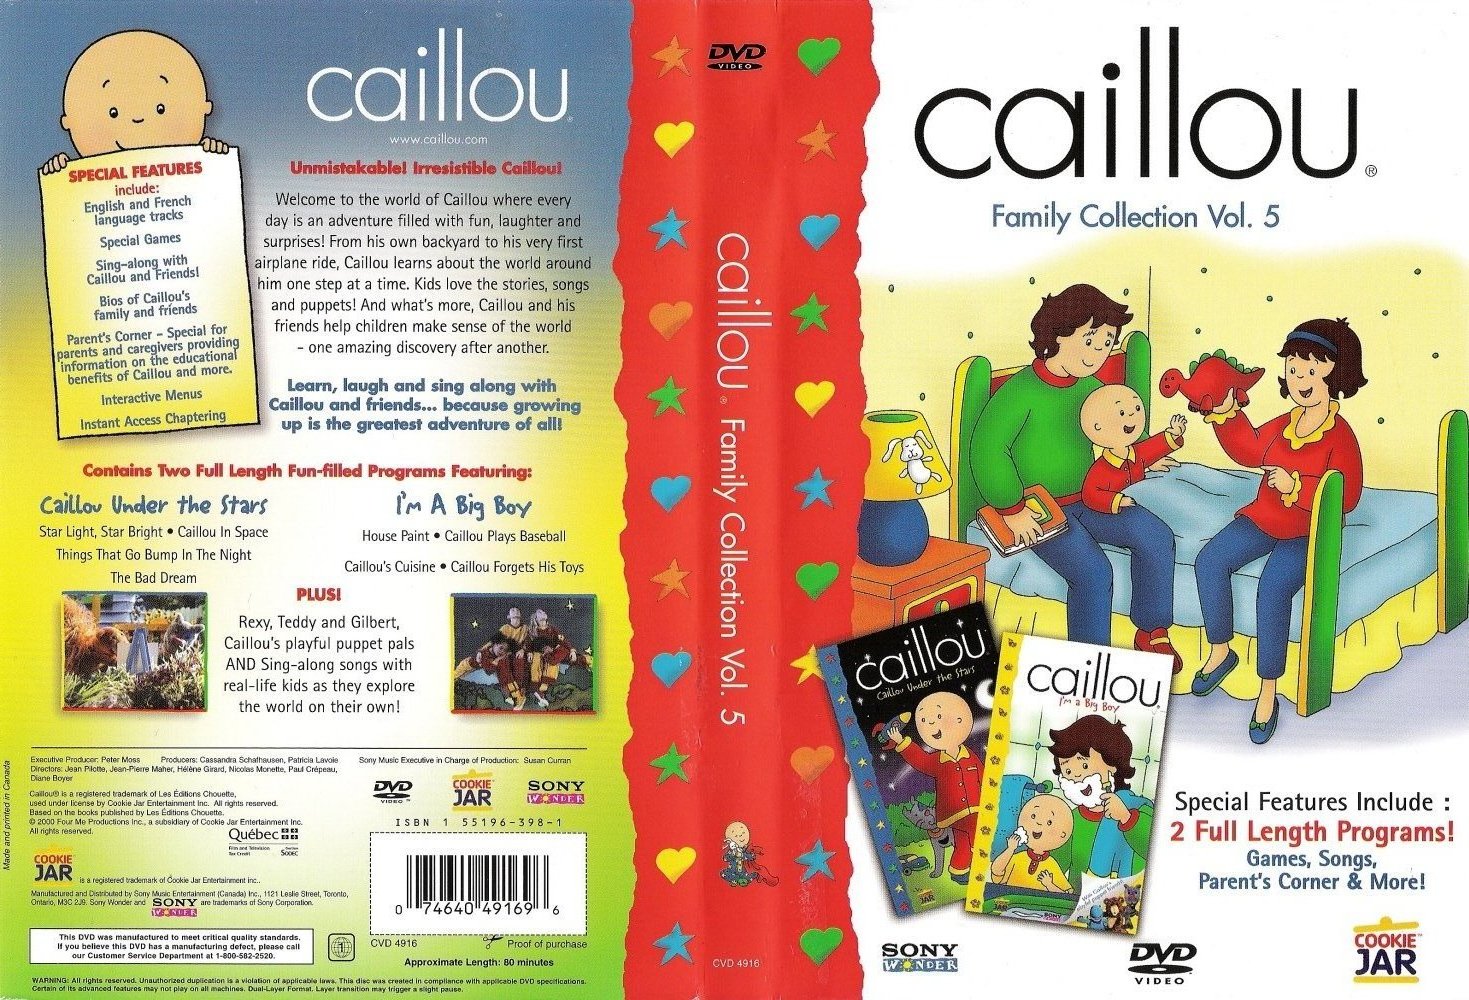 Jaquette DVD Caillou vol 5 (Canadienne)